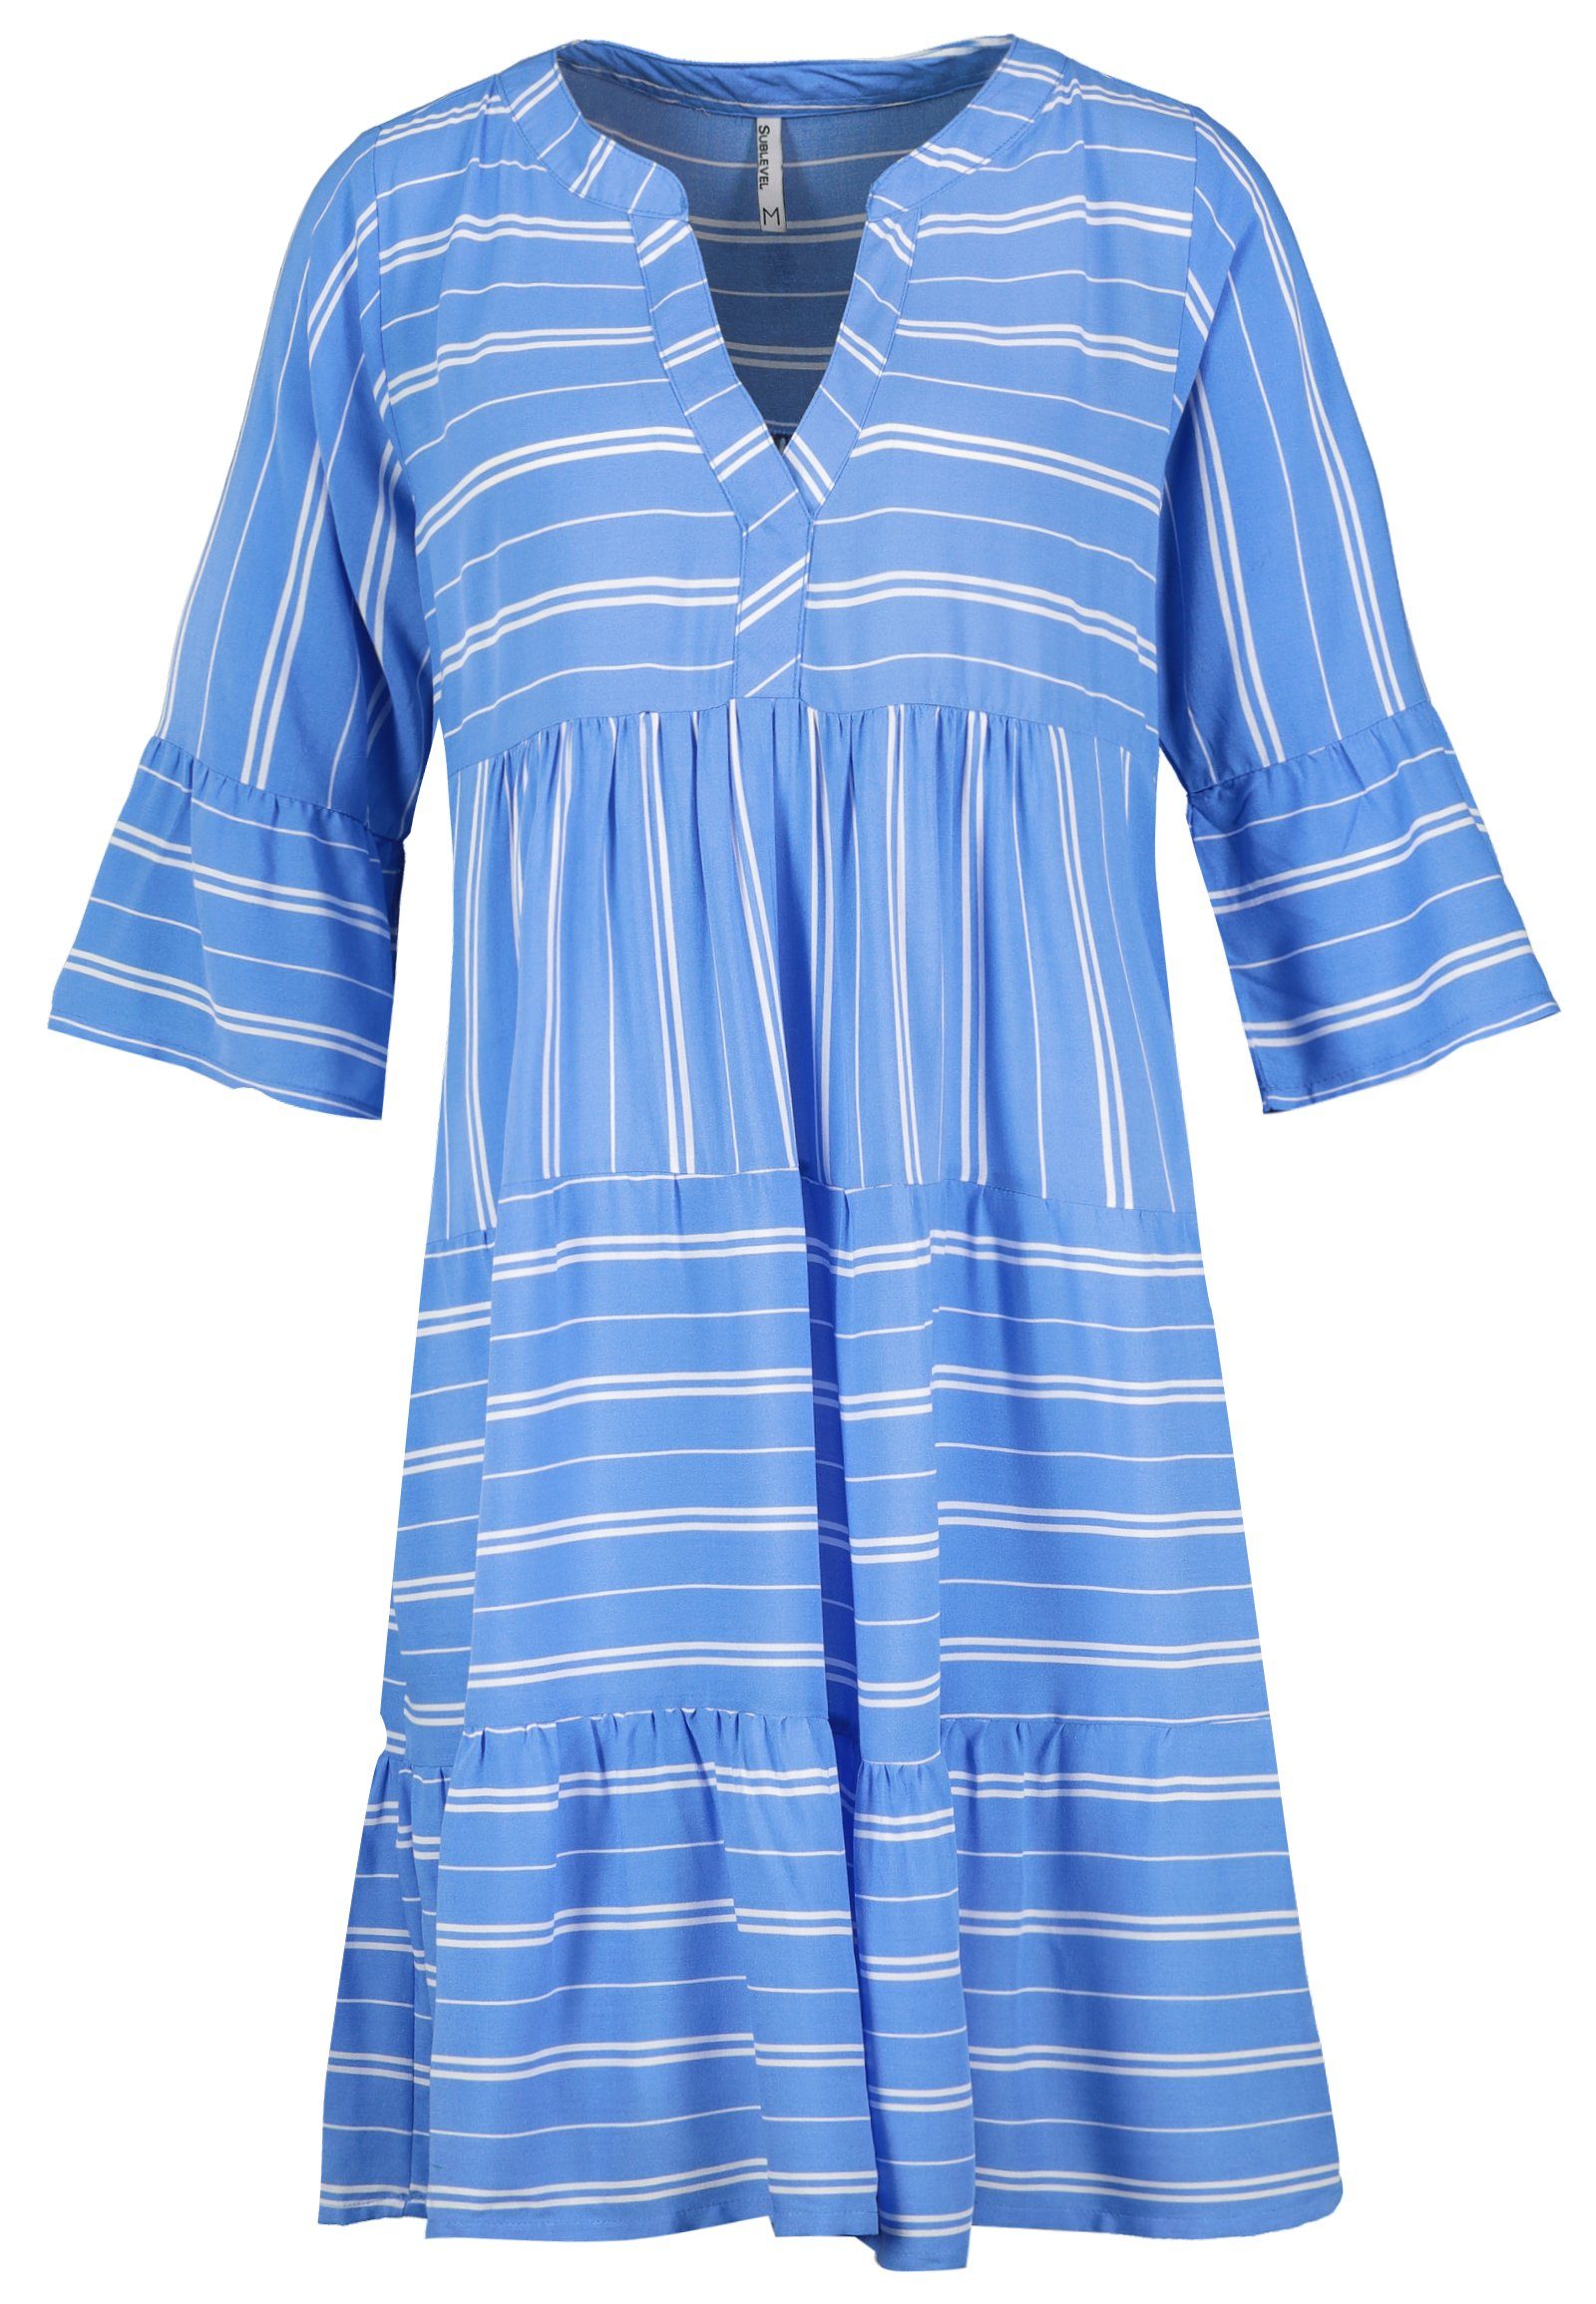 SUBLEVEL Strandkleid Sublevel Damen Kleid Strandkleid Sommerkleid 100% Viskose MIT VOLANTS Middle Blue